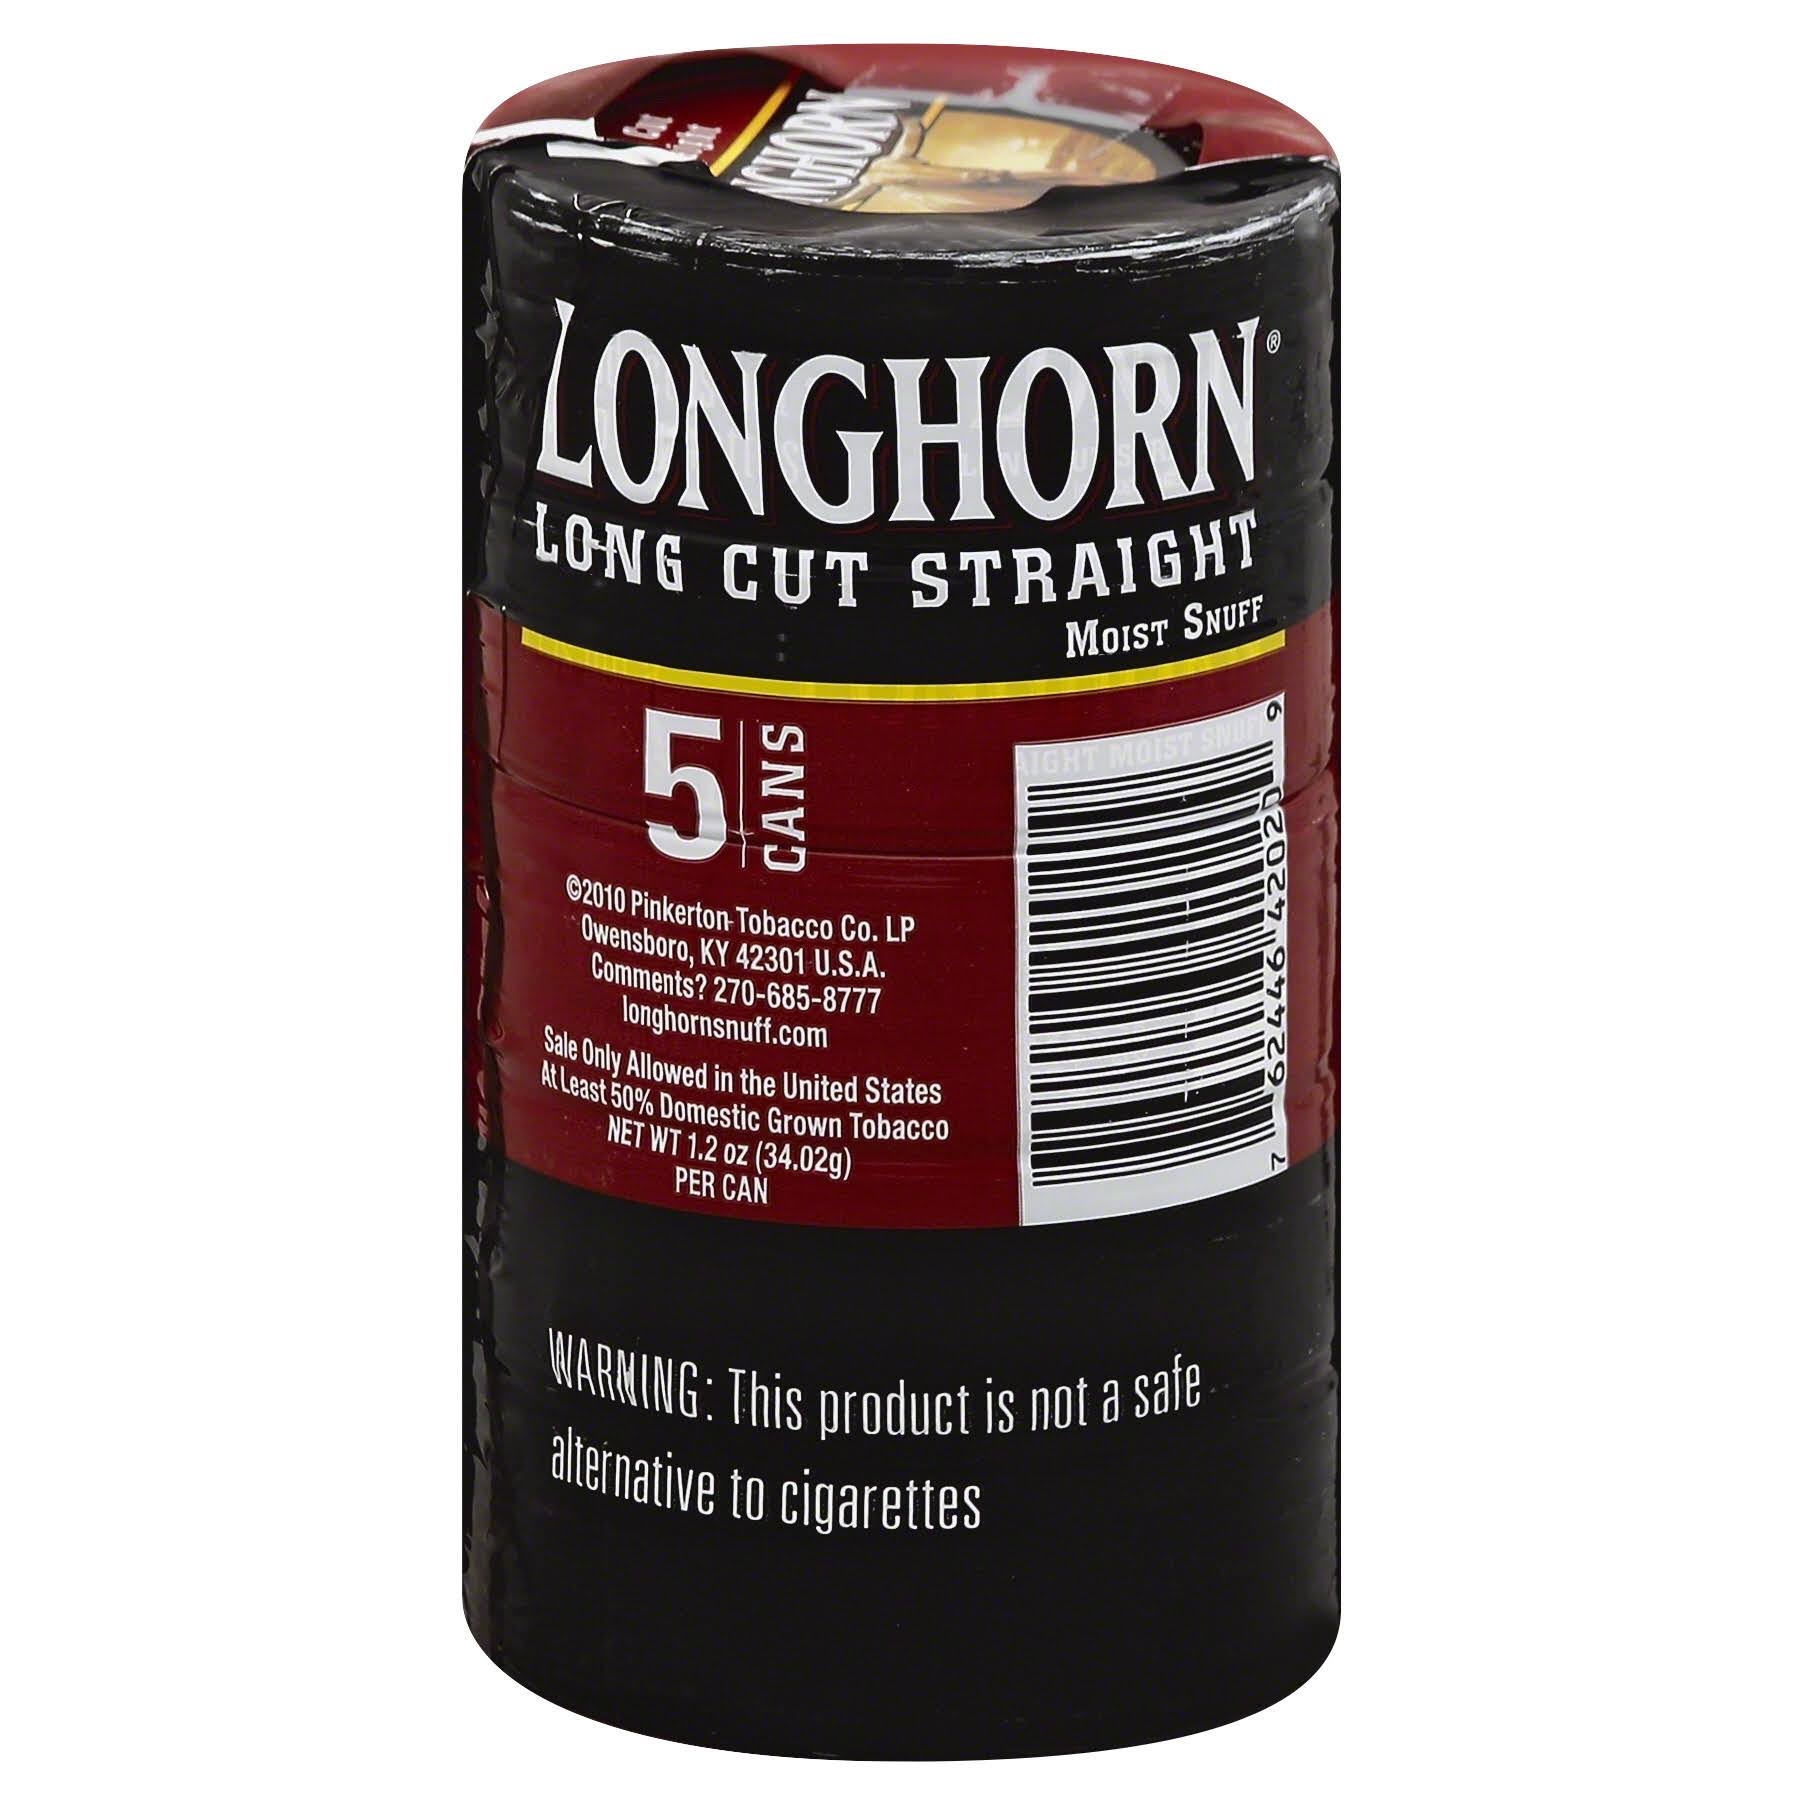 Longhorn Moist Snuff, Long Cut, Straight - 5 pack, 1.2 oz cans